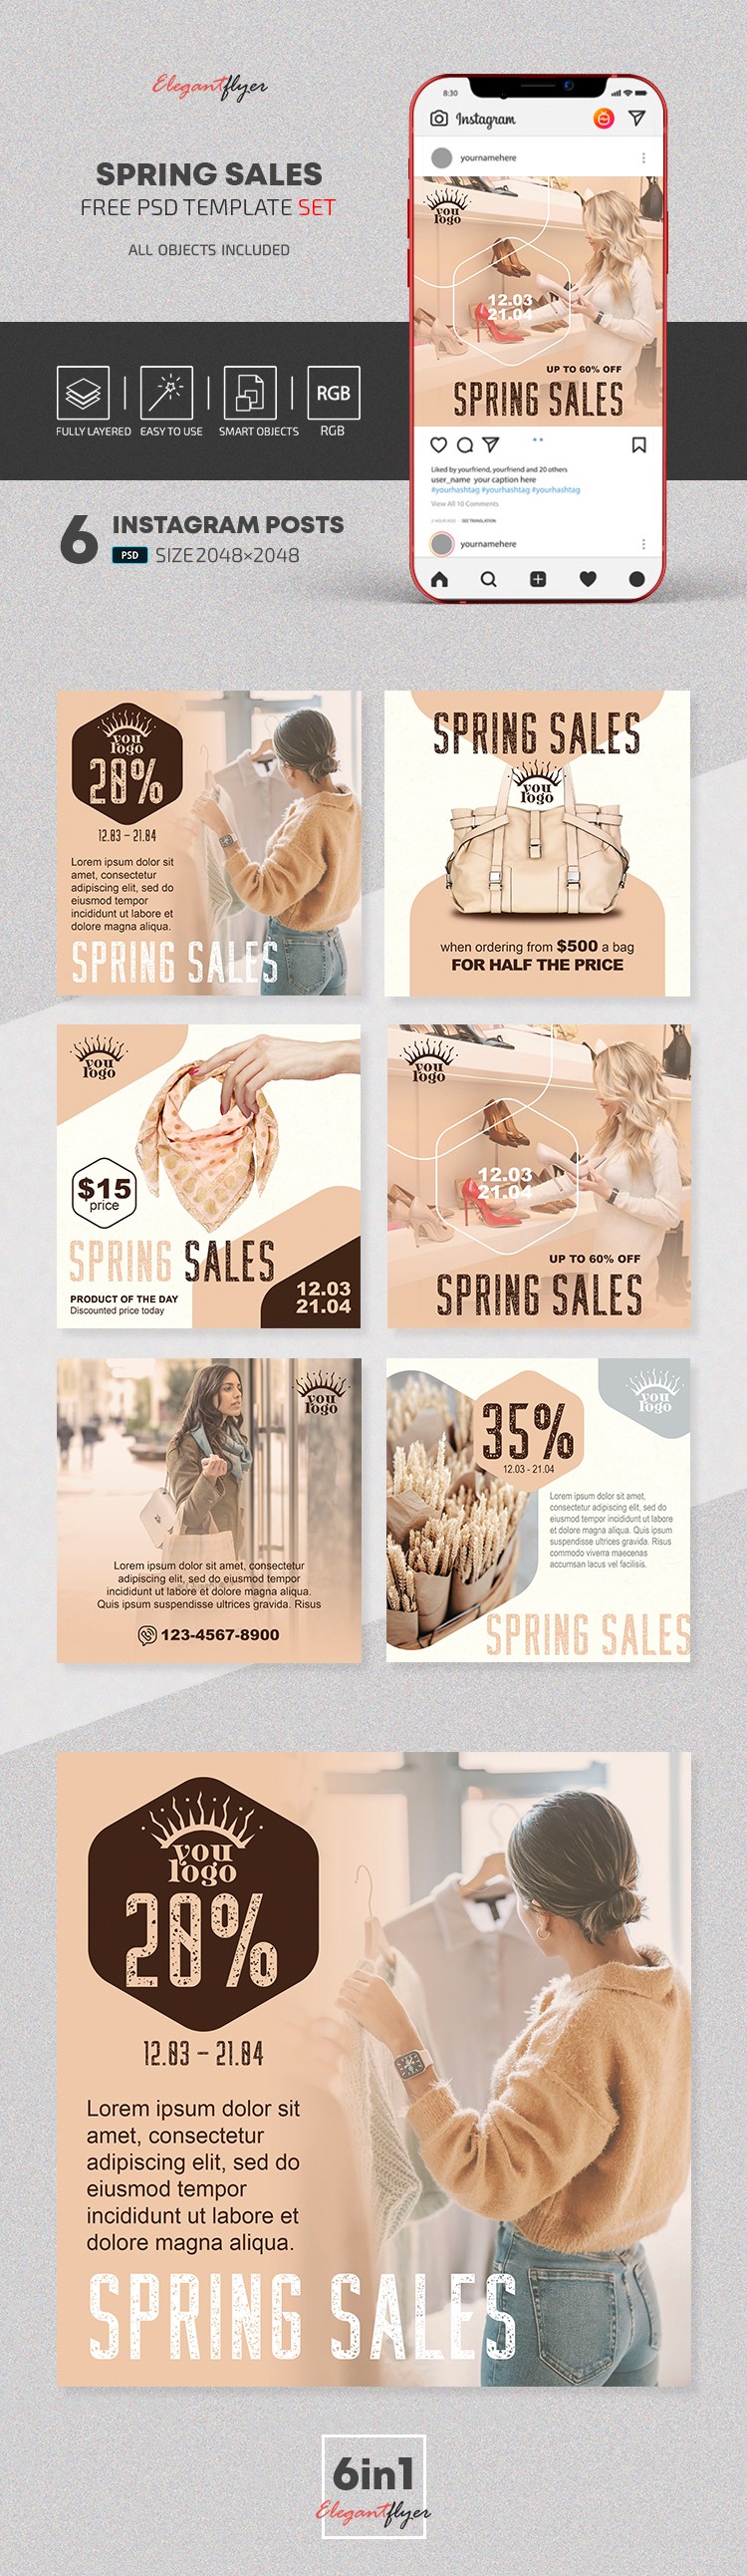 Spring Sales Instagram by ElegantFlyer